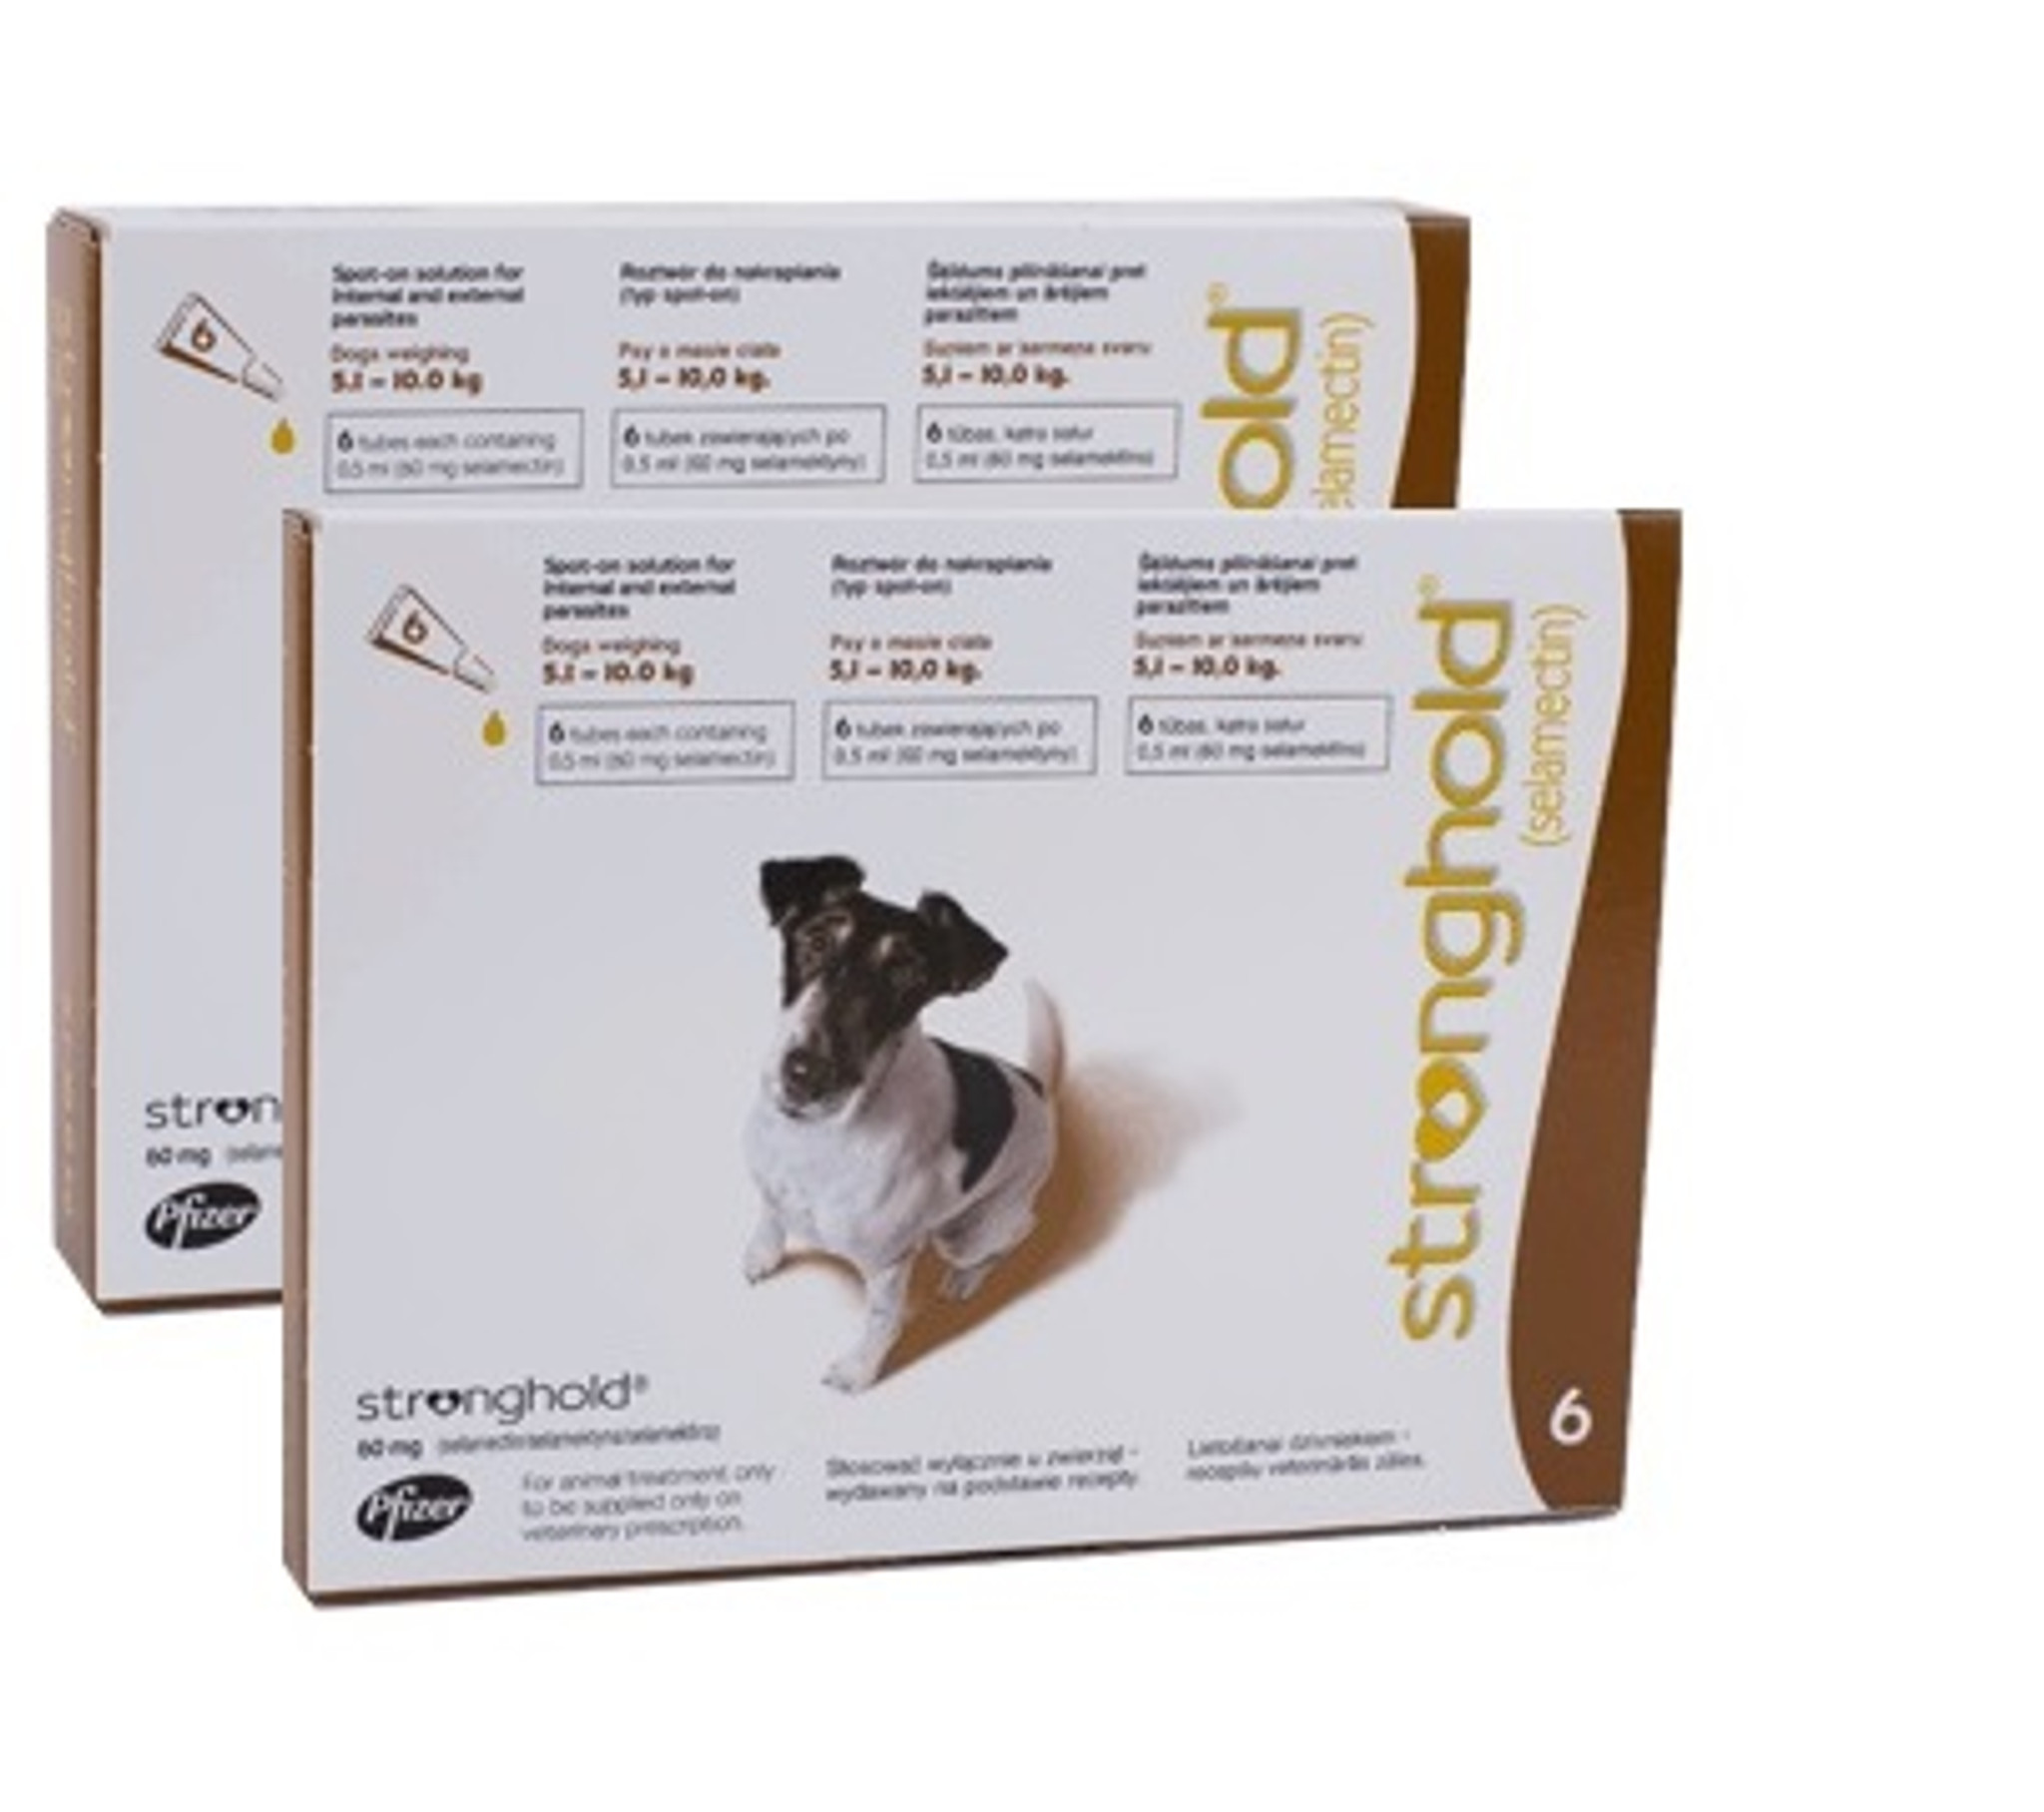 Stronghold for Dogs 10.120 lbs Brown 12 Pack Sierra Pet Meds